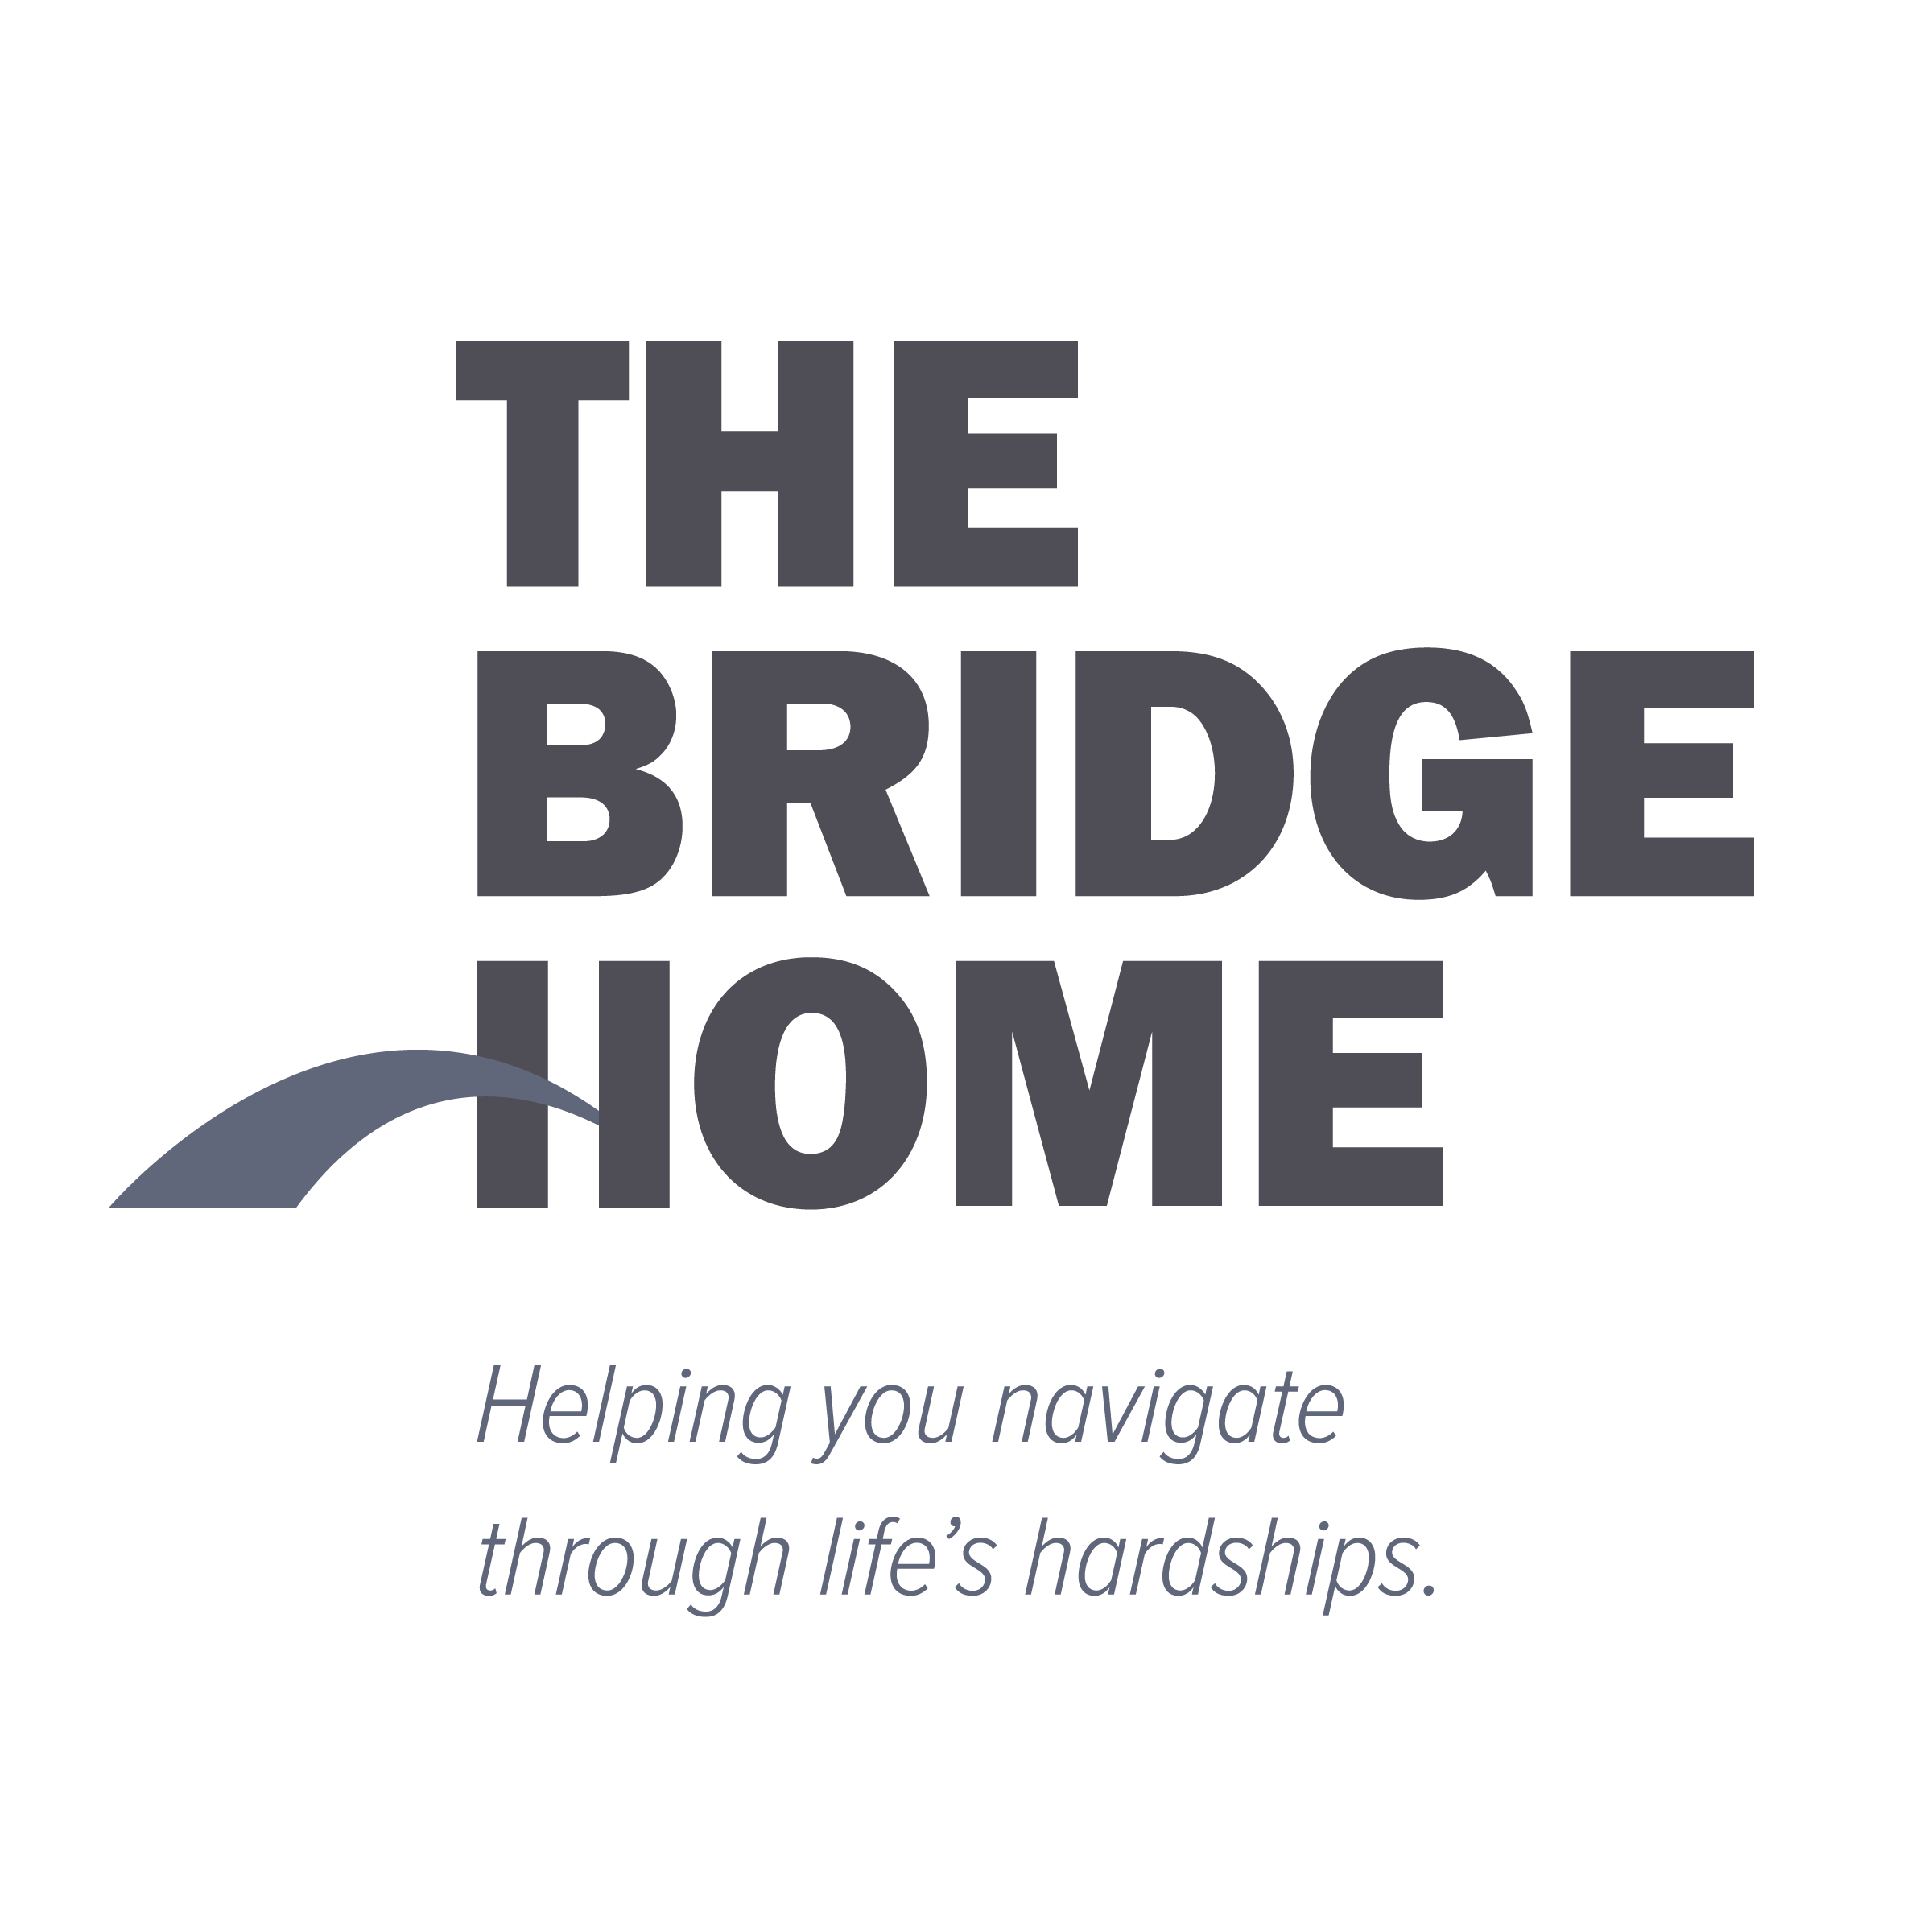 The Bridge Home. Helping you navigate through life's hardships.